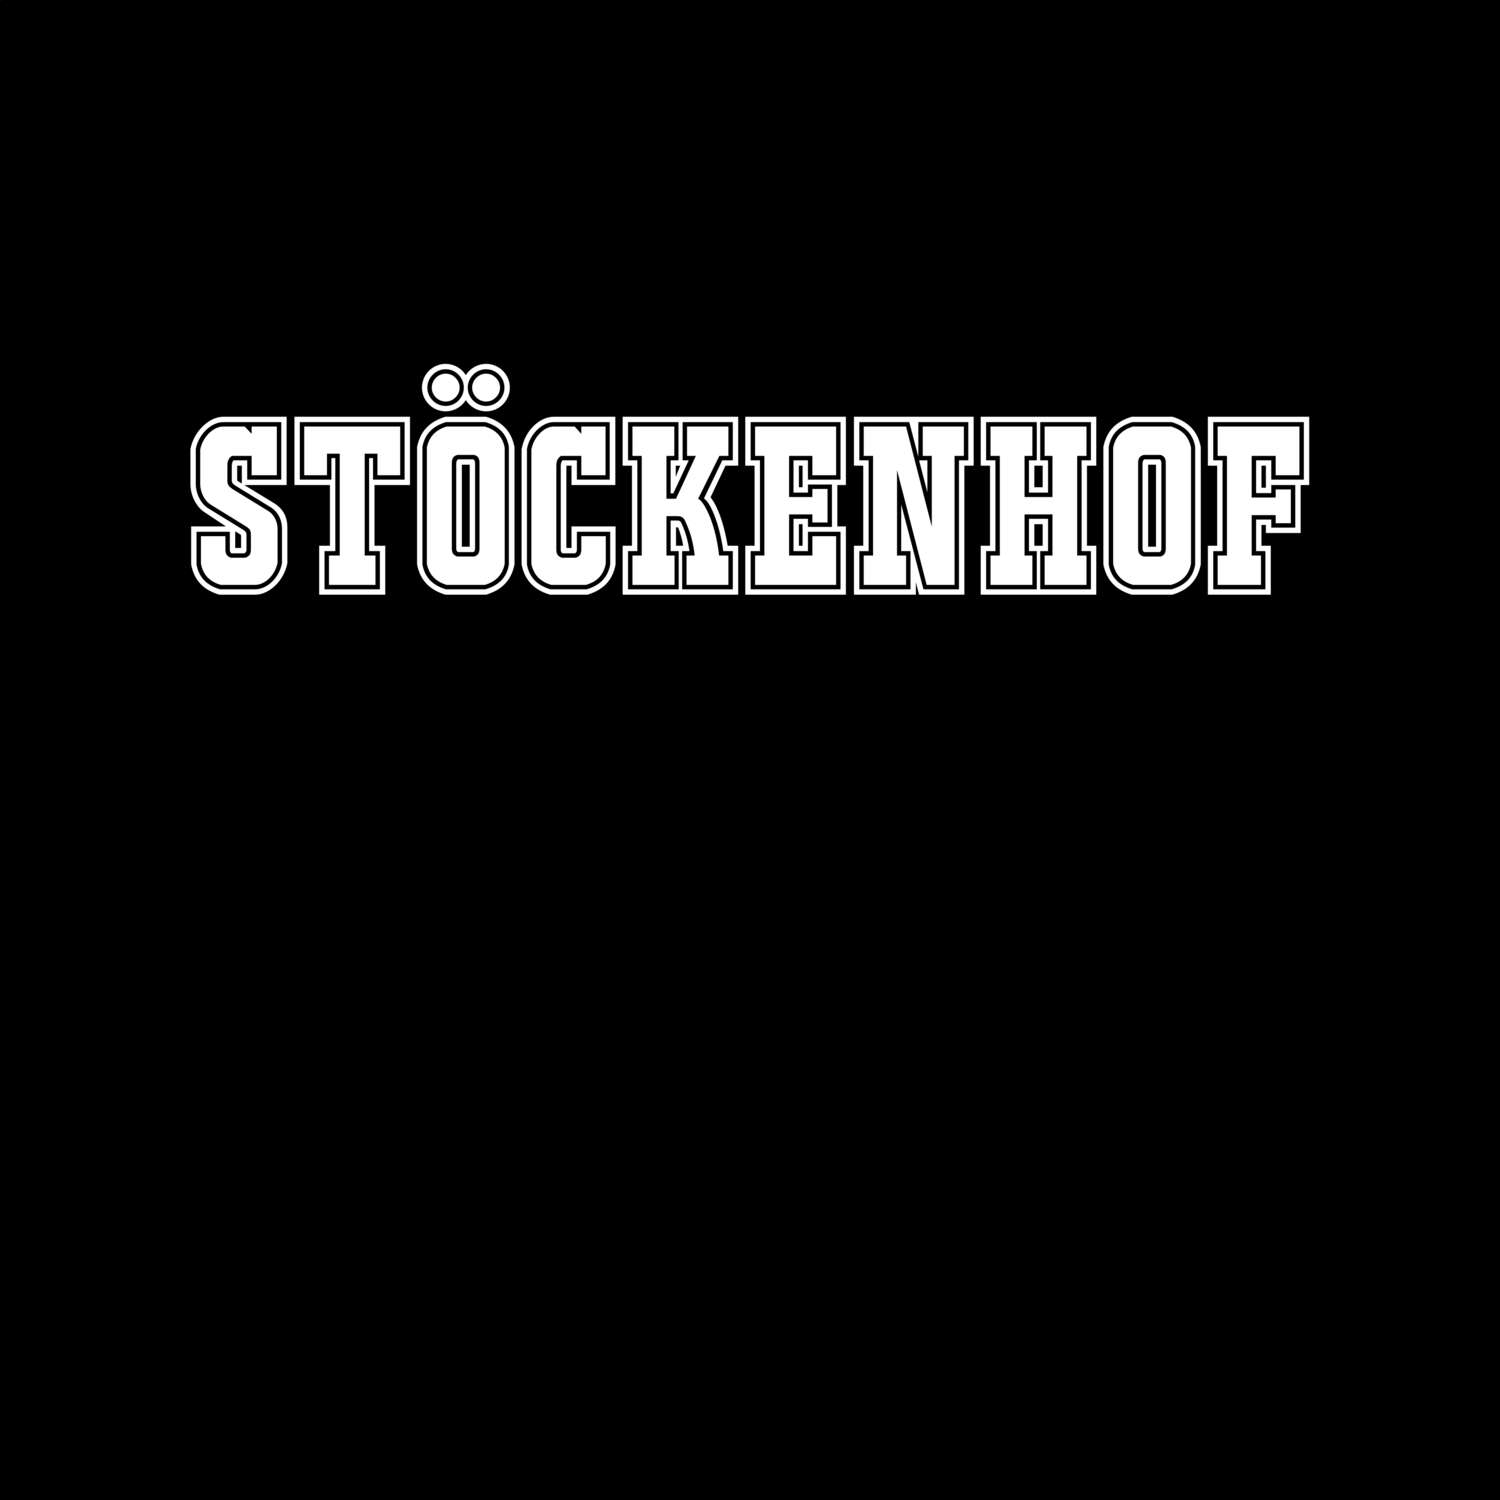 Stöckenhof T-Shirt »Classic«